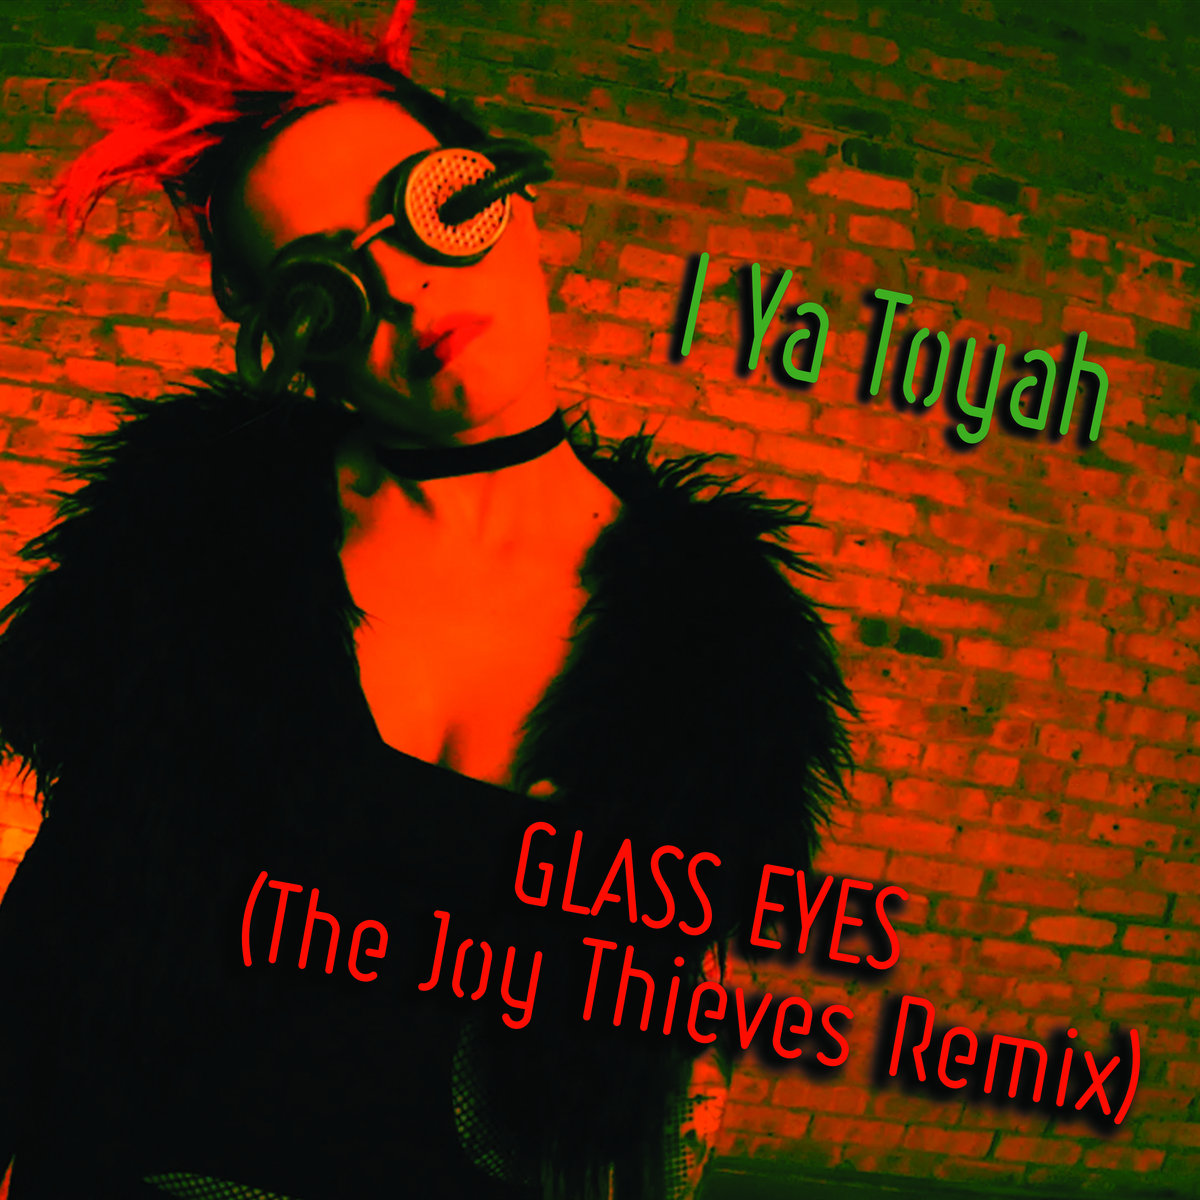 Glass Eyes (The Joy Thieves Remix)